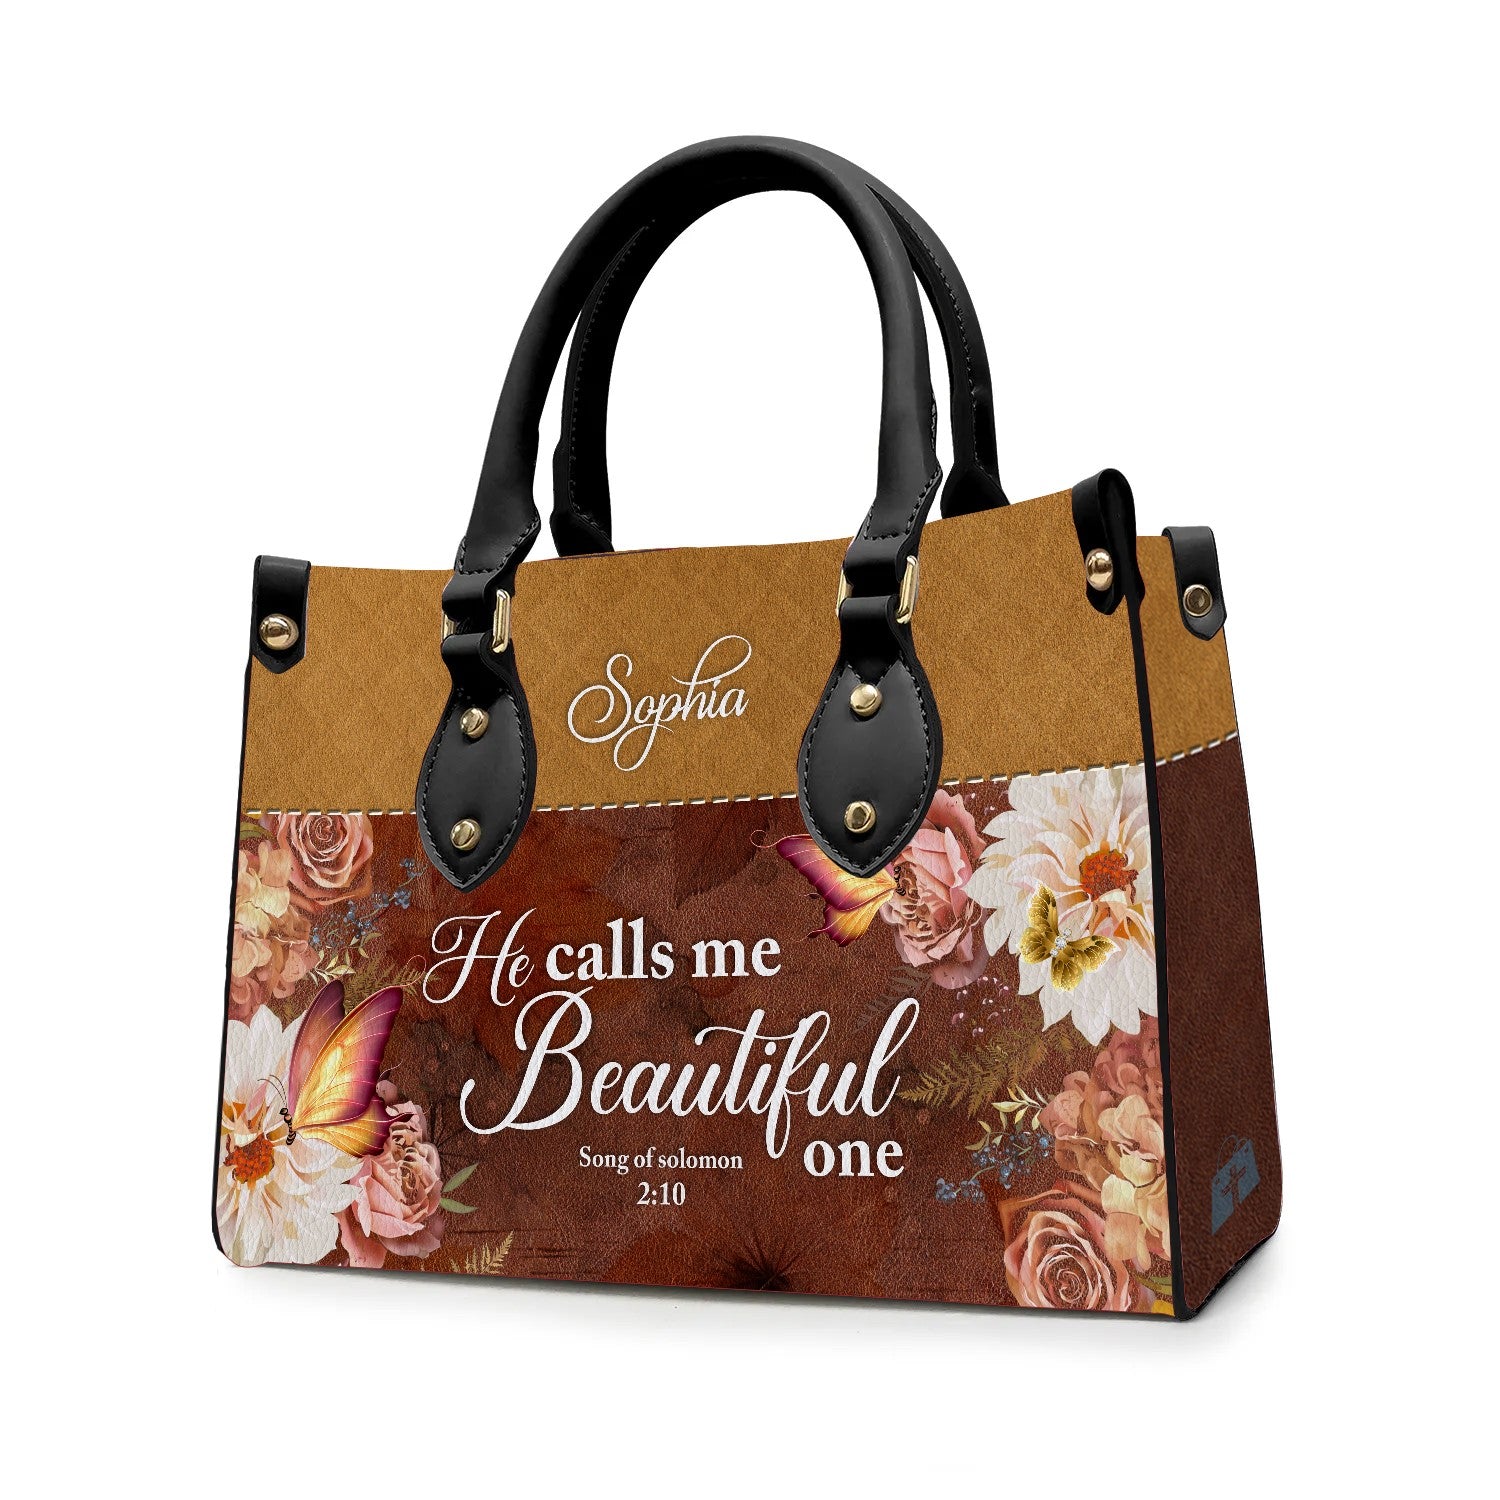 Christianartbag Handbags, He Calls Me Beautiful One Leather Handbag, Butterfly Flower Leather Handbag, Design Handbag, Gifts for Women, CABLTB01031123. - Christian Art Bag